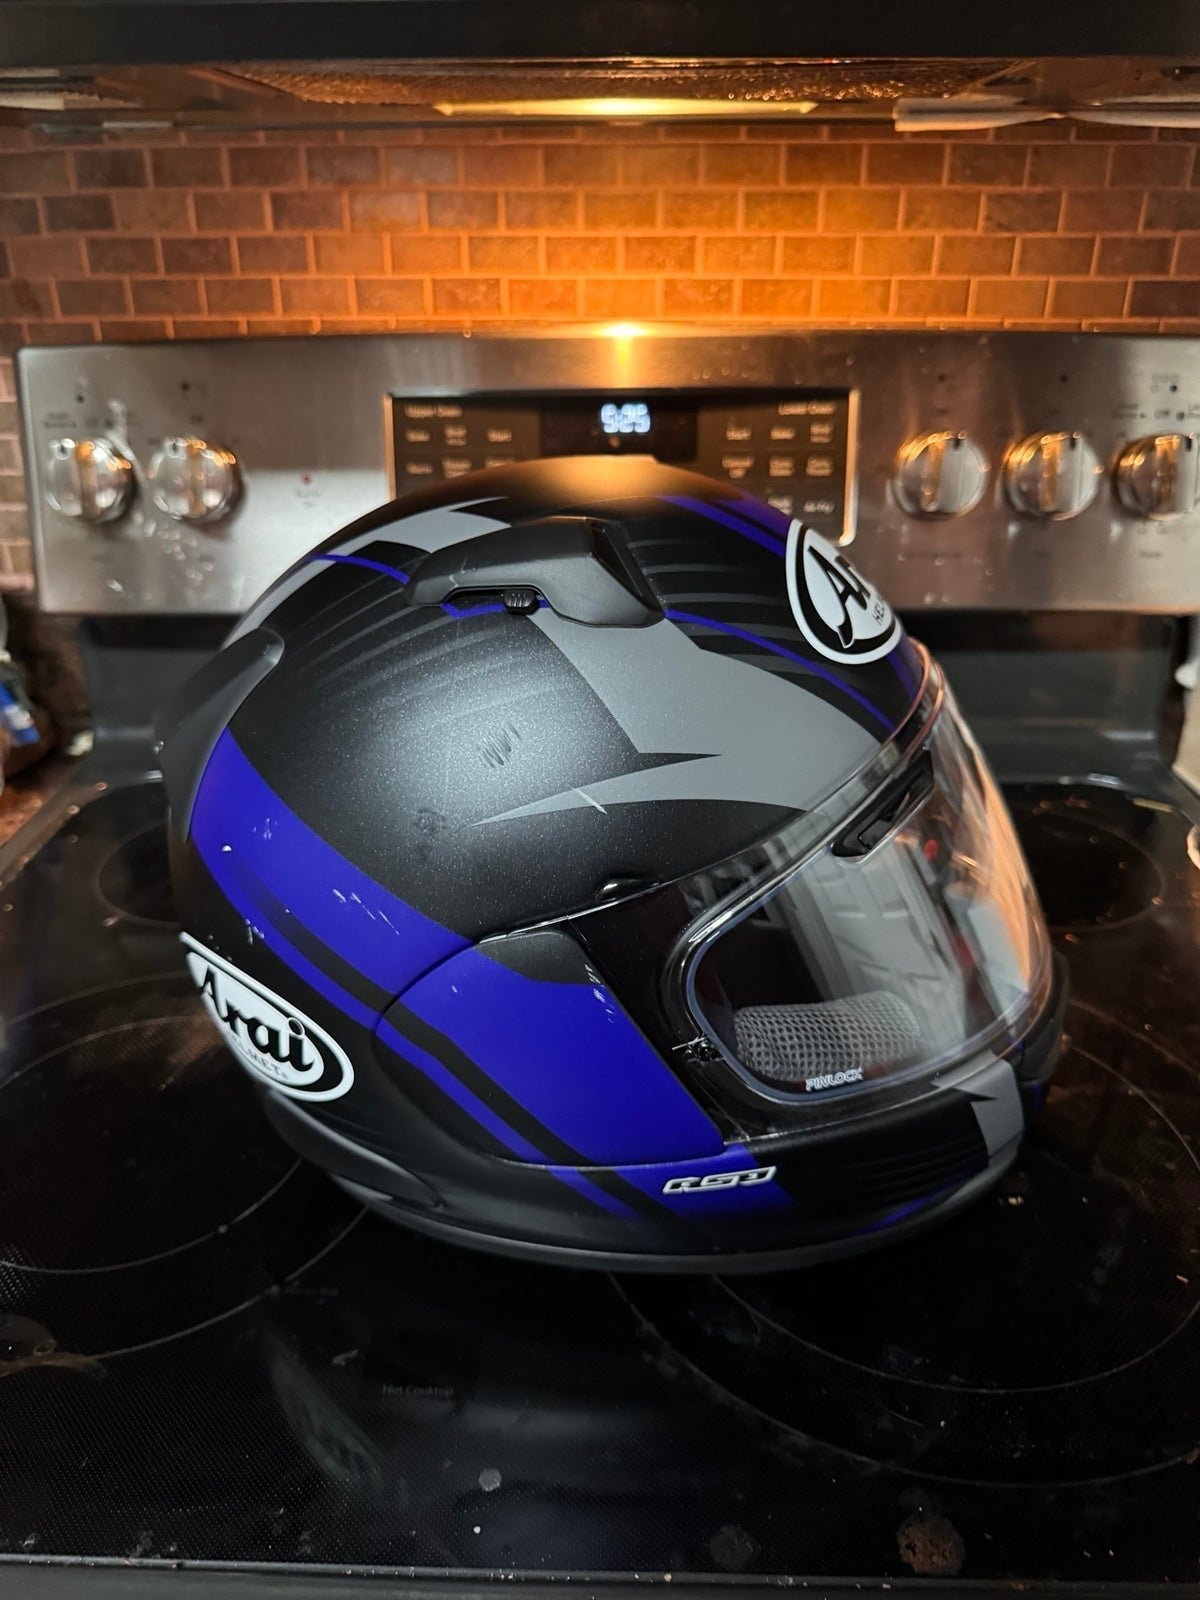 Motorcycle Helmet 6nPXx4wgM